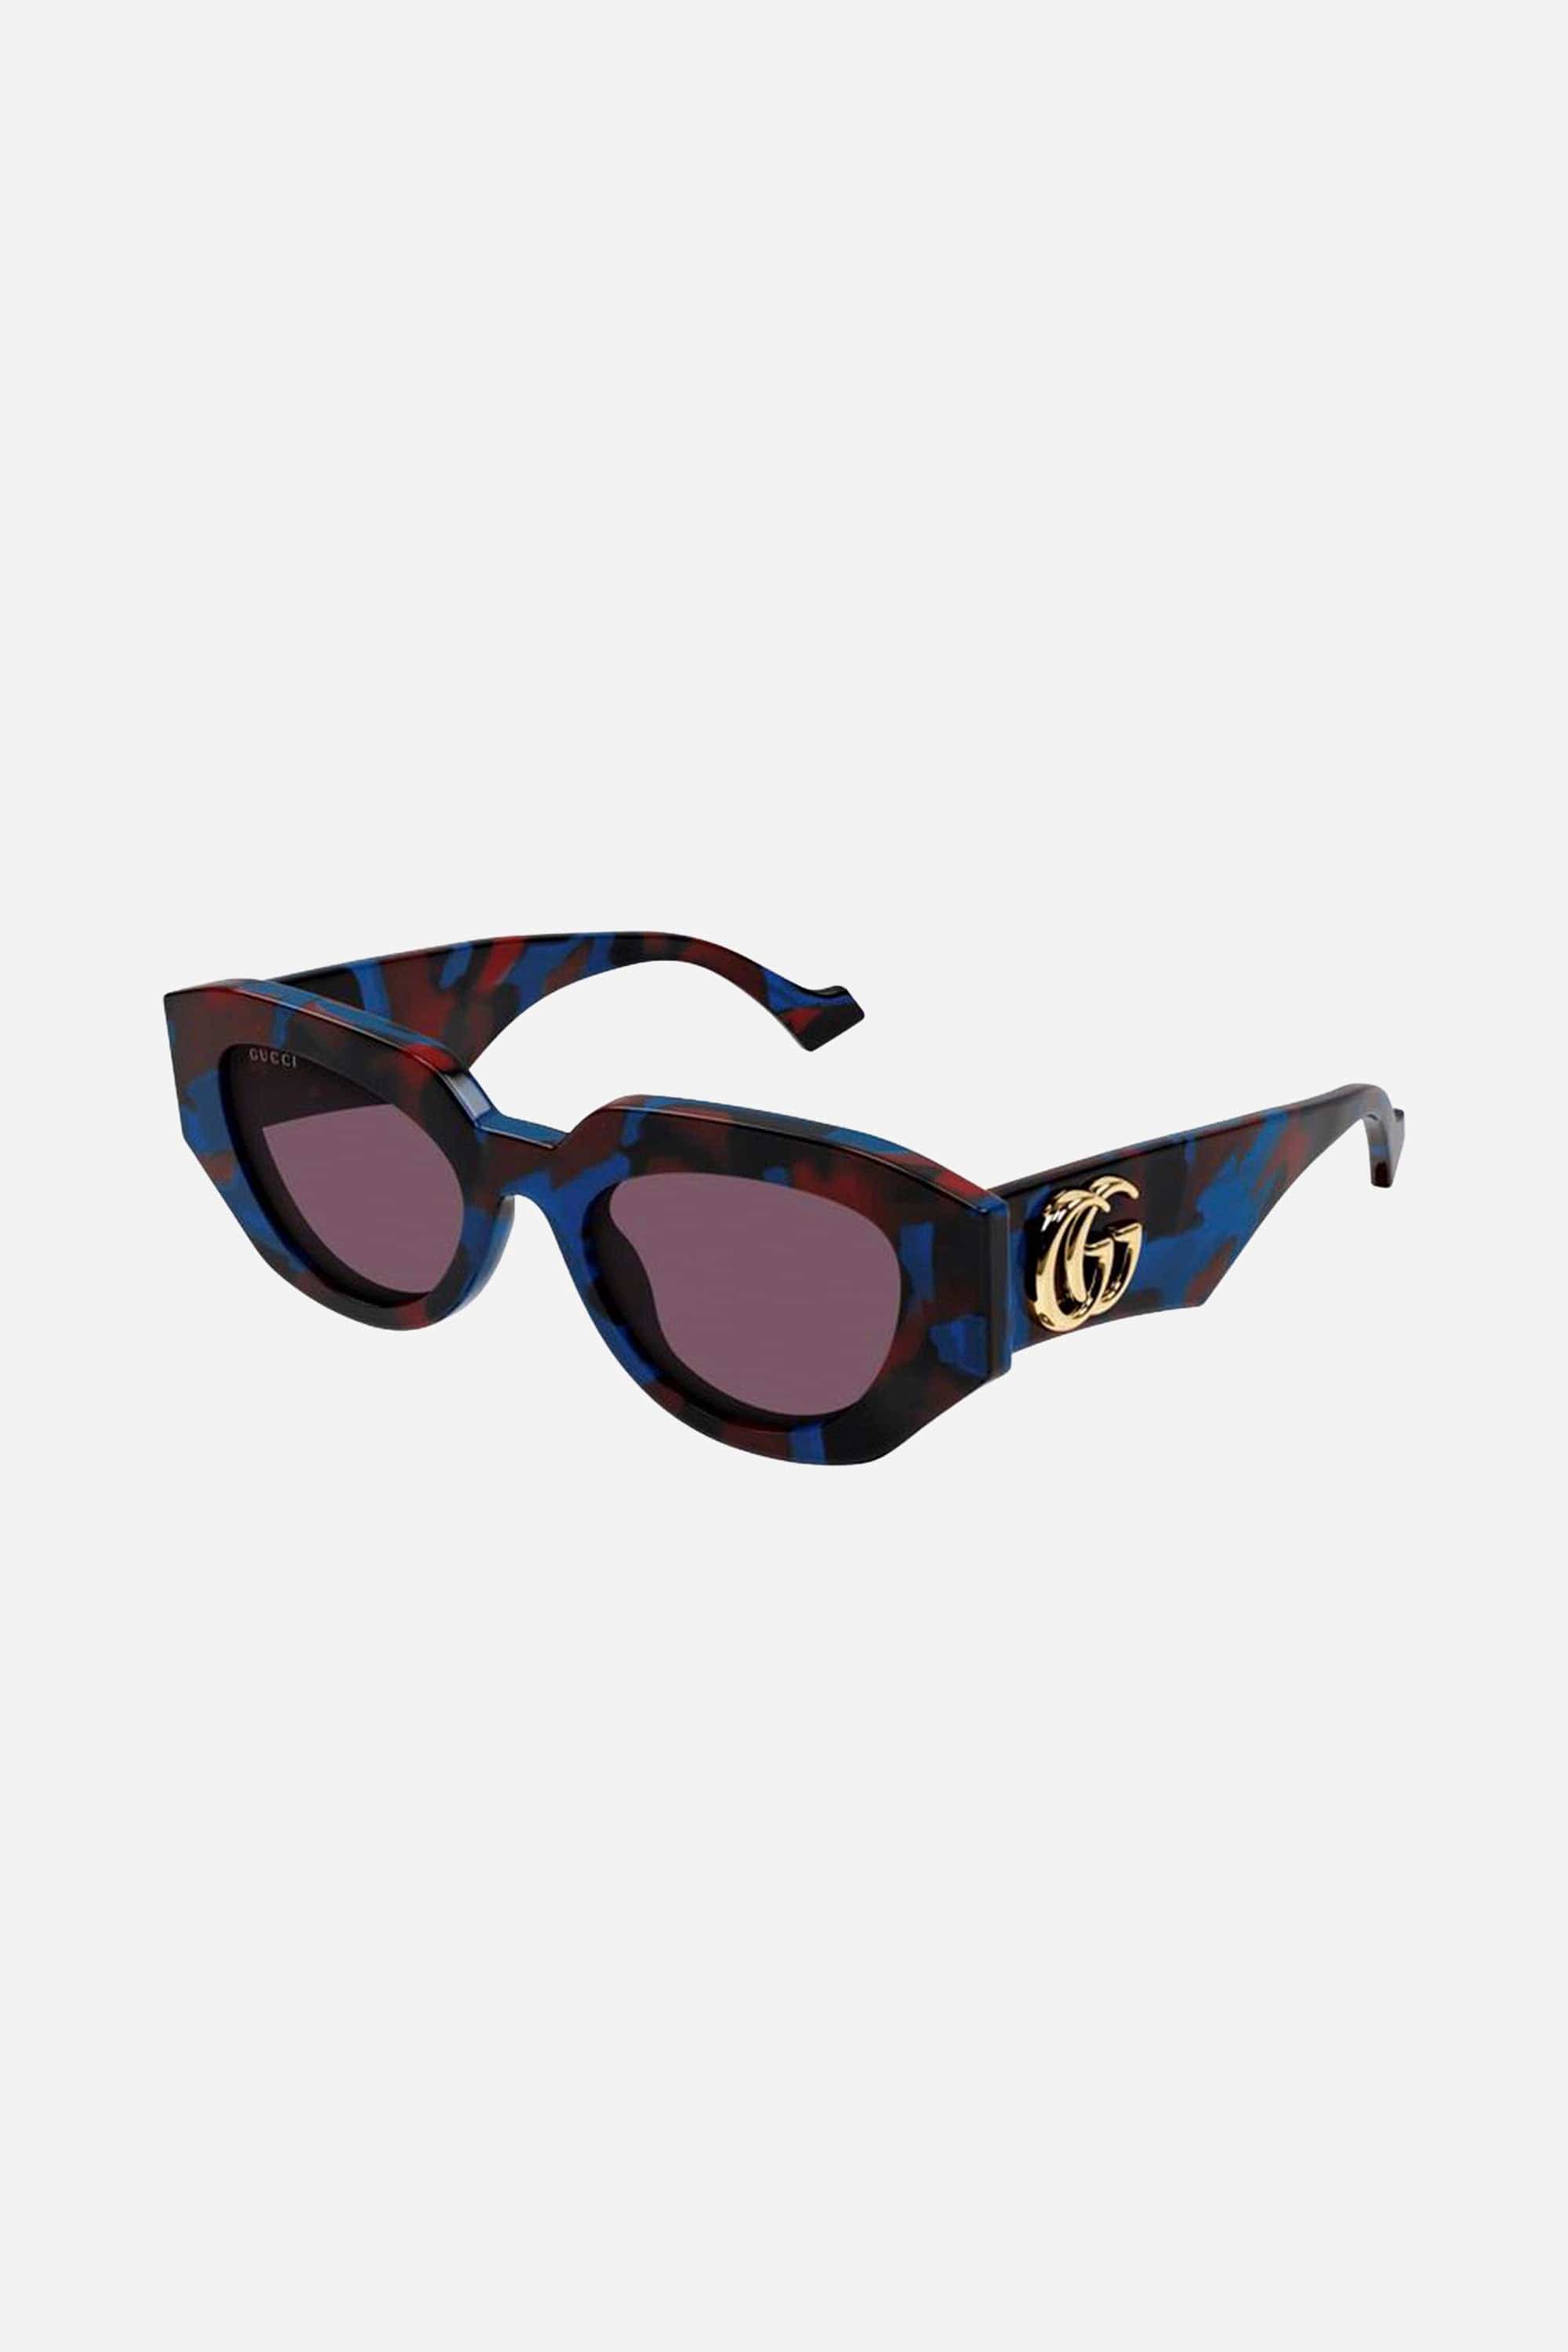 Gucci multicolor round chuncky sunglasses - Eyewear Club